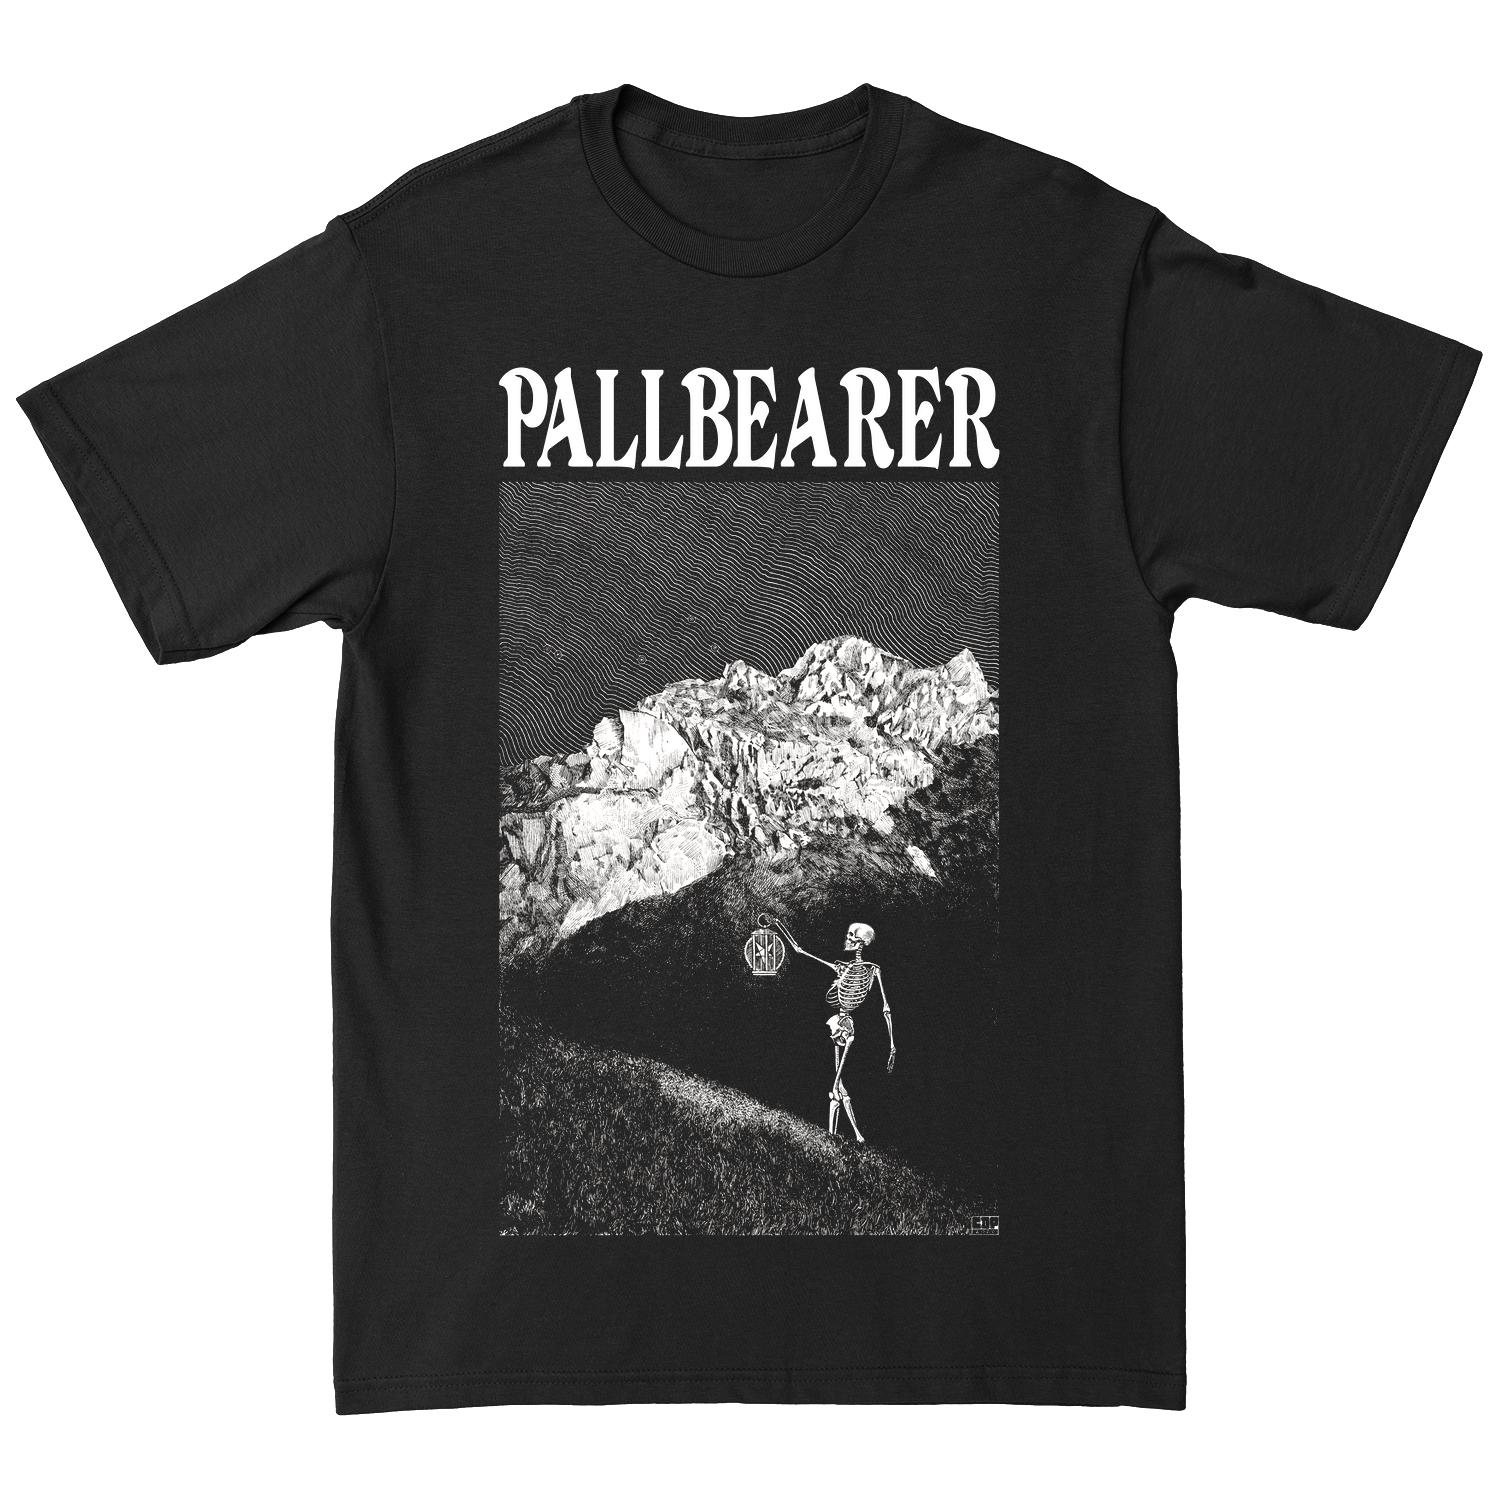 PALLBEARER "Hermit" Black T-Shirt